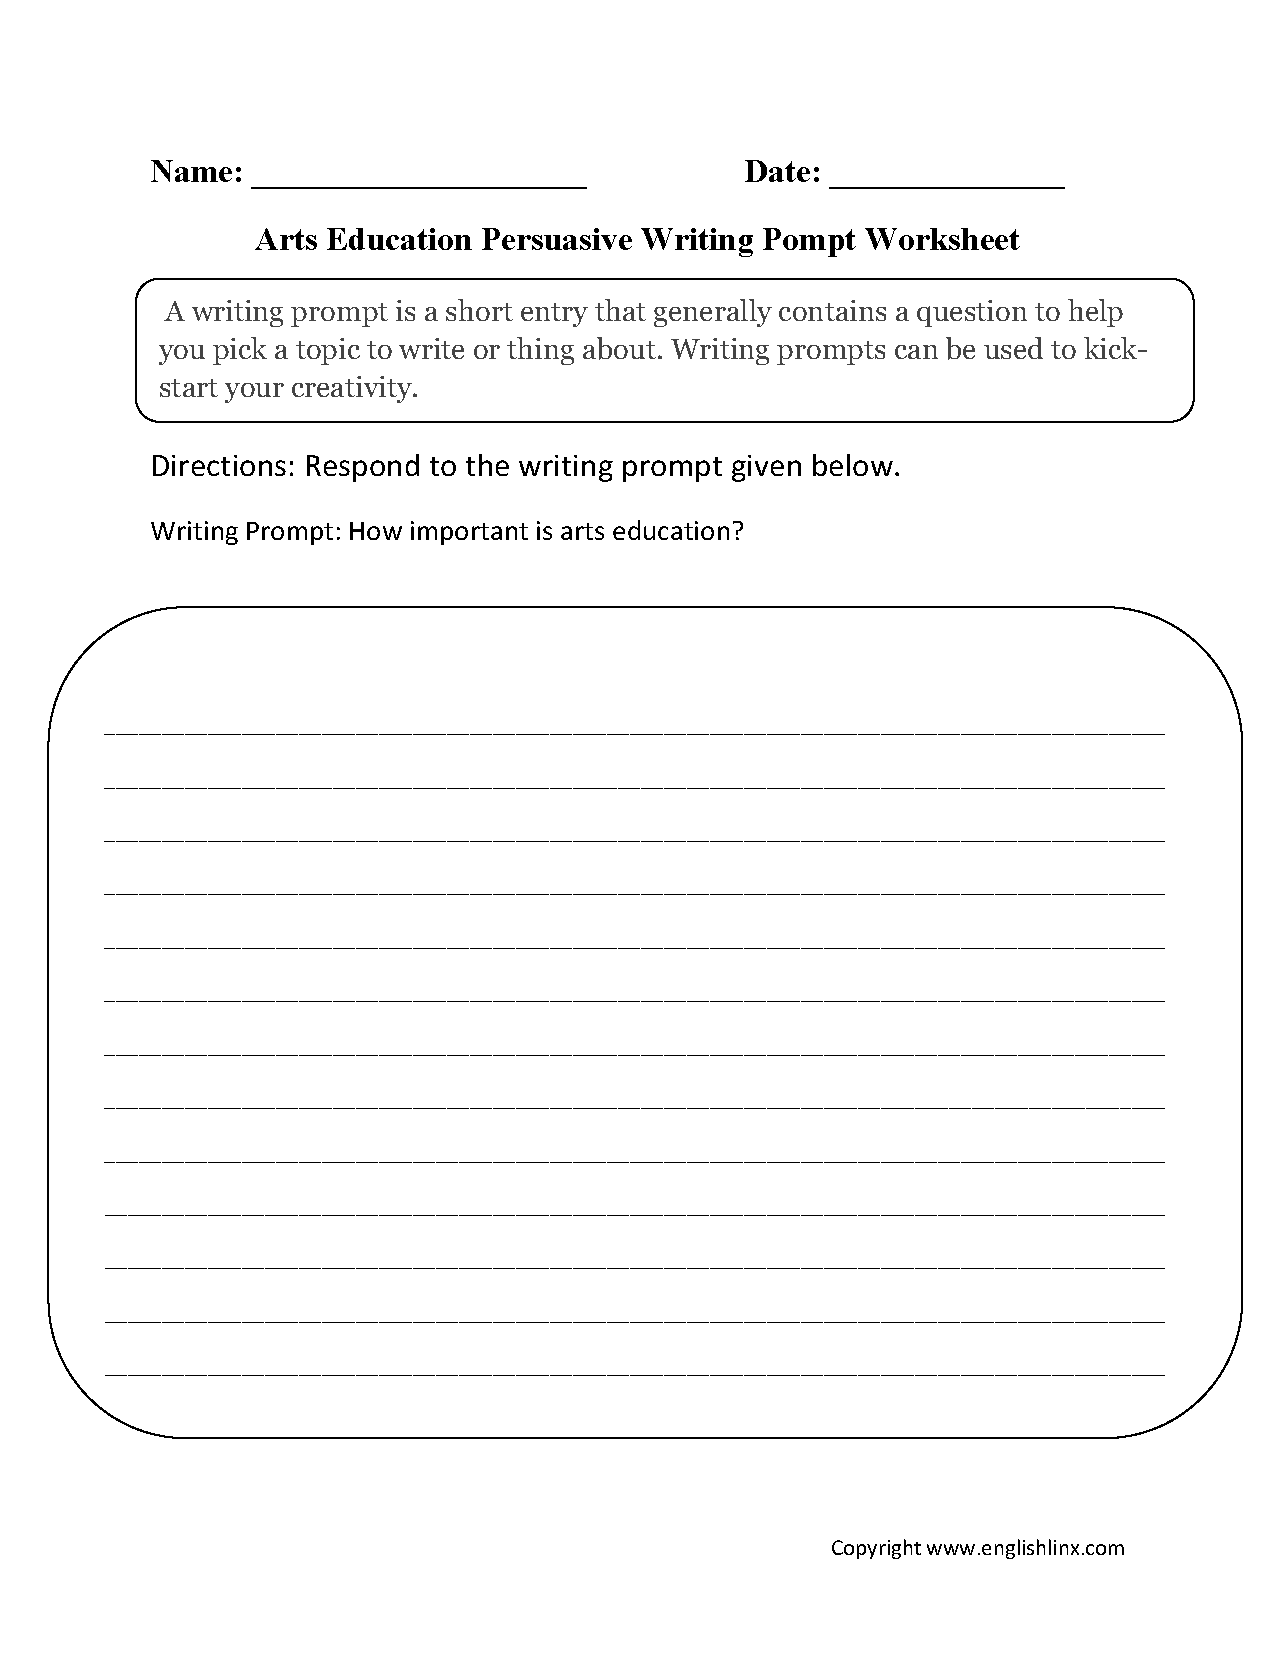 Arts Education Persuasive Writing Prompt Worksheets